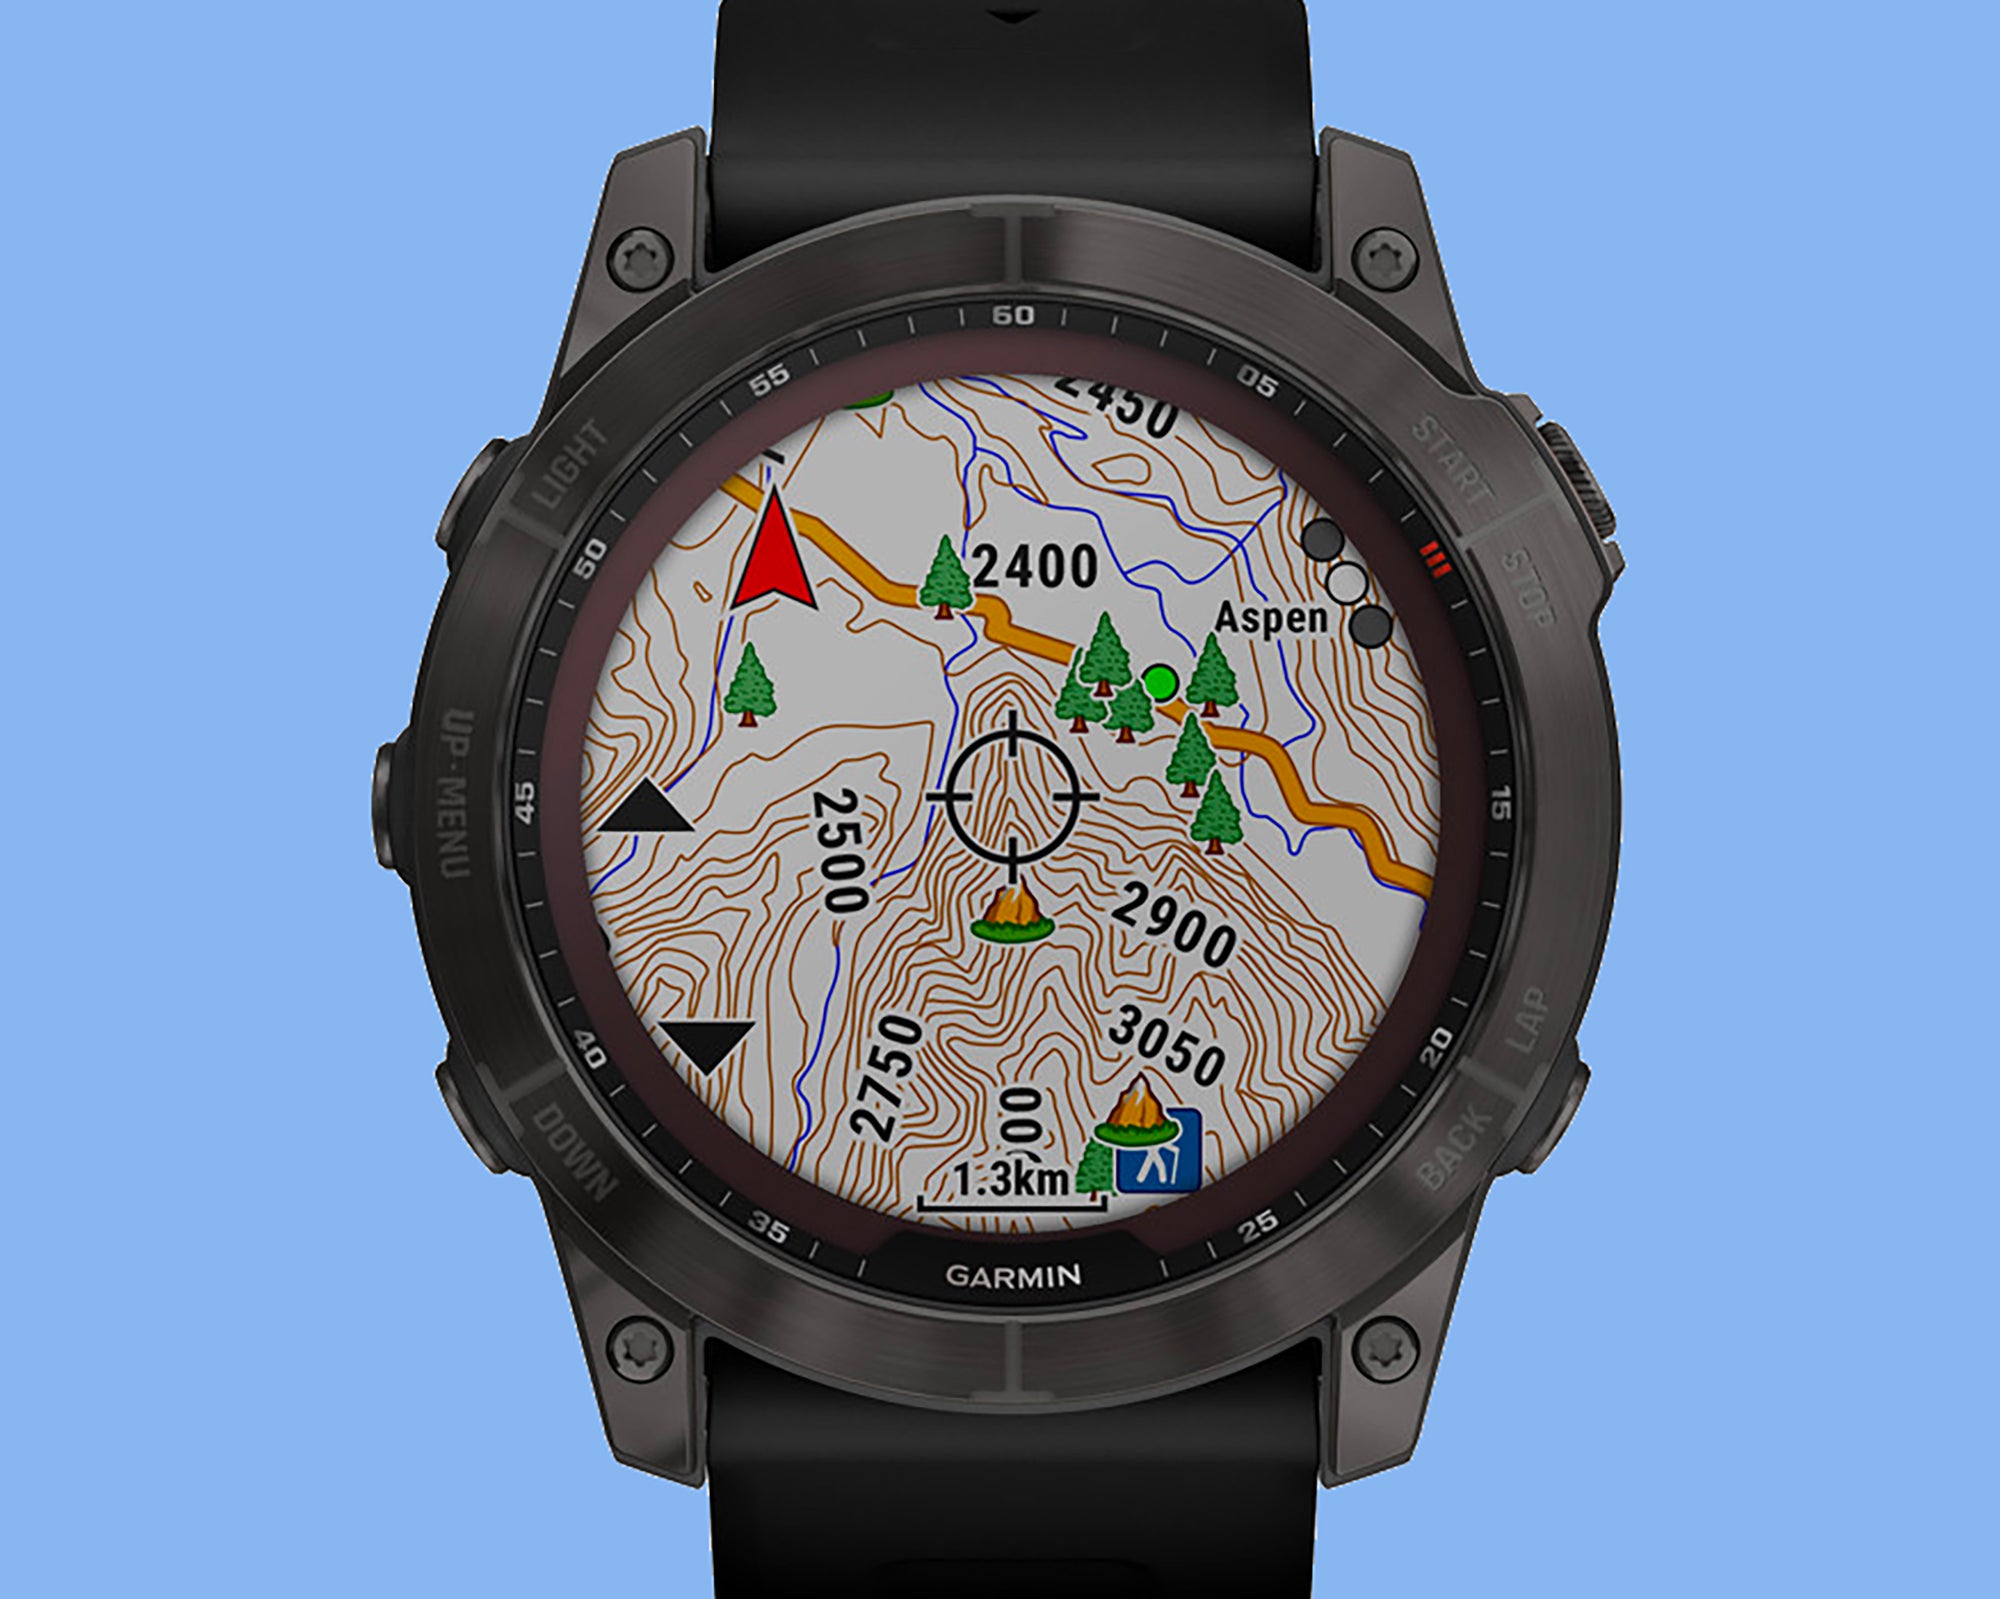 A Garmin Fenix 7 smartwatch showing its maps and navigation display.